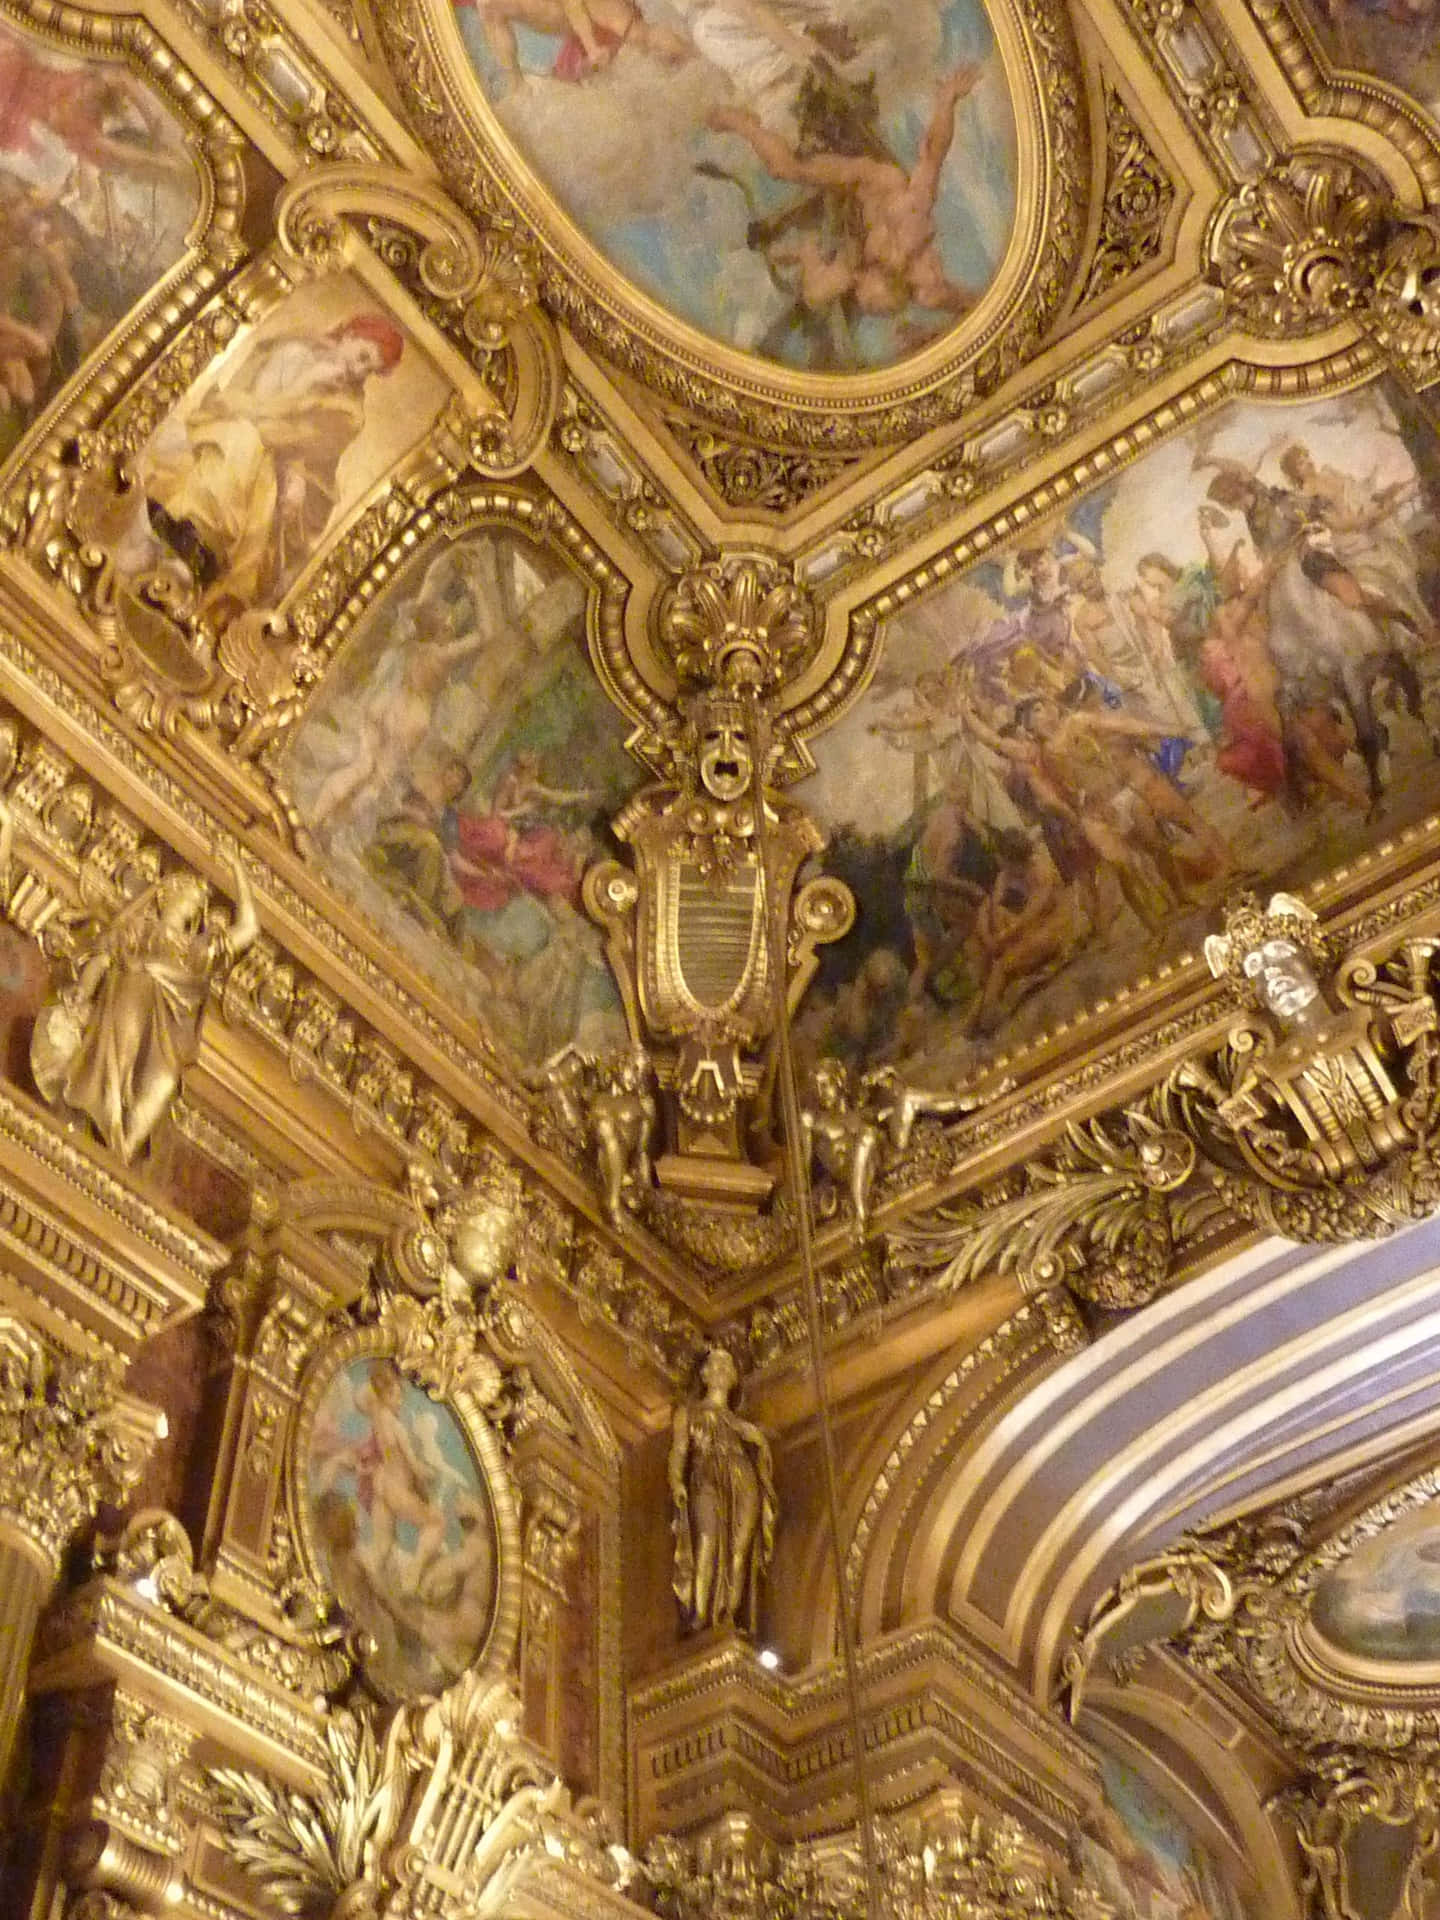 Imagende Arte Clásico Del Palais Garnier Francés.